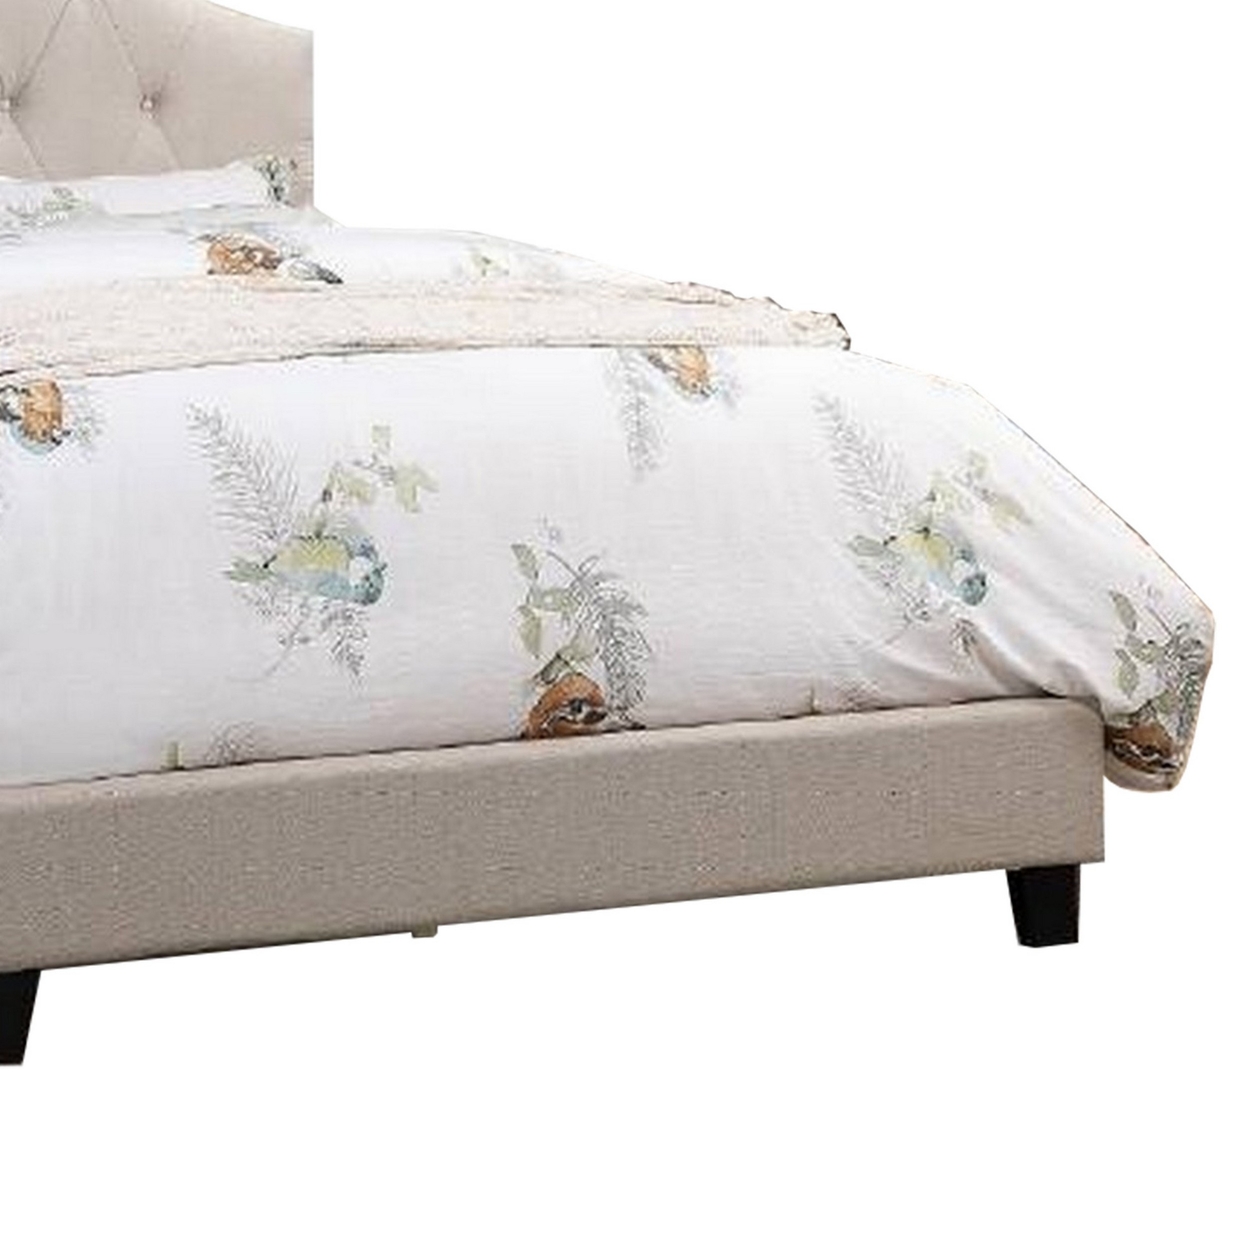 Eni Upholstered King Size Bed, Tufted Adjustable Headboard, Taupe Fabric- Saltoro Sherpi